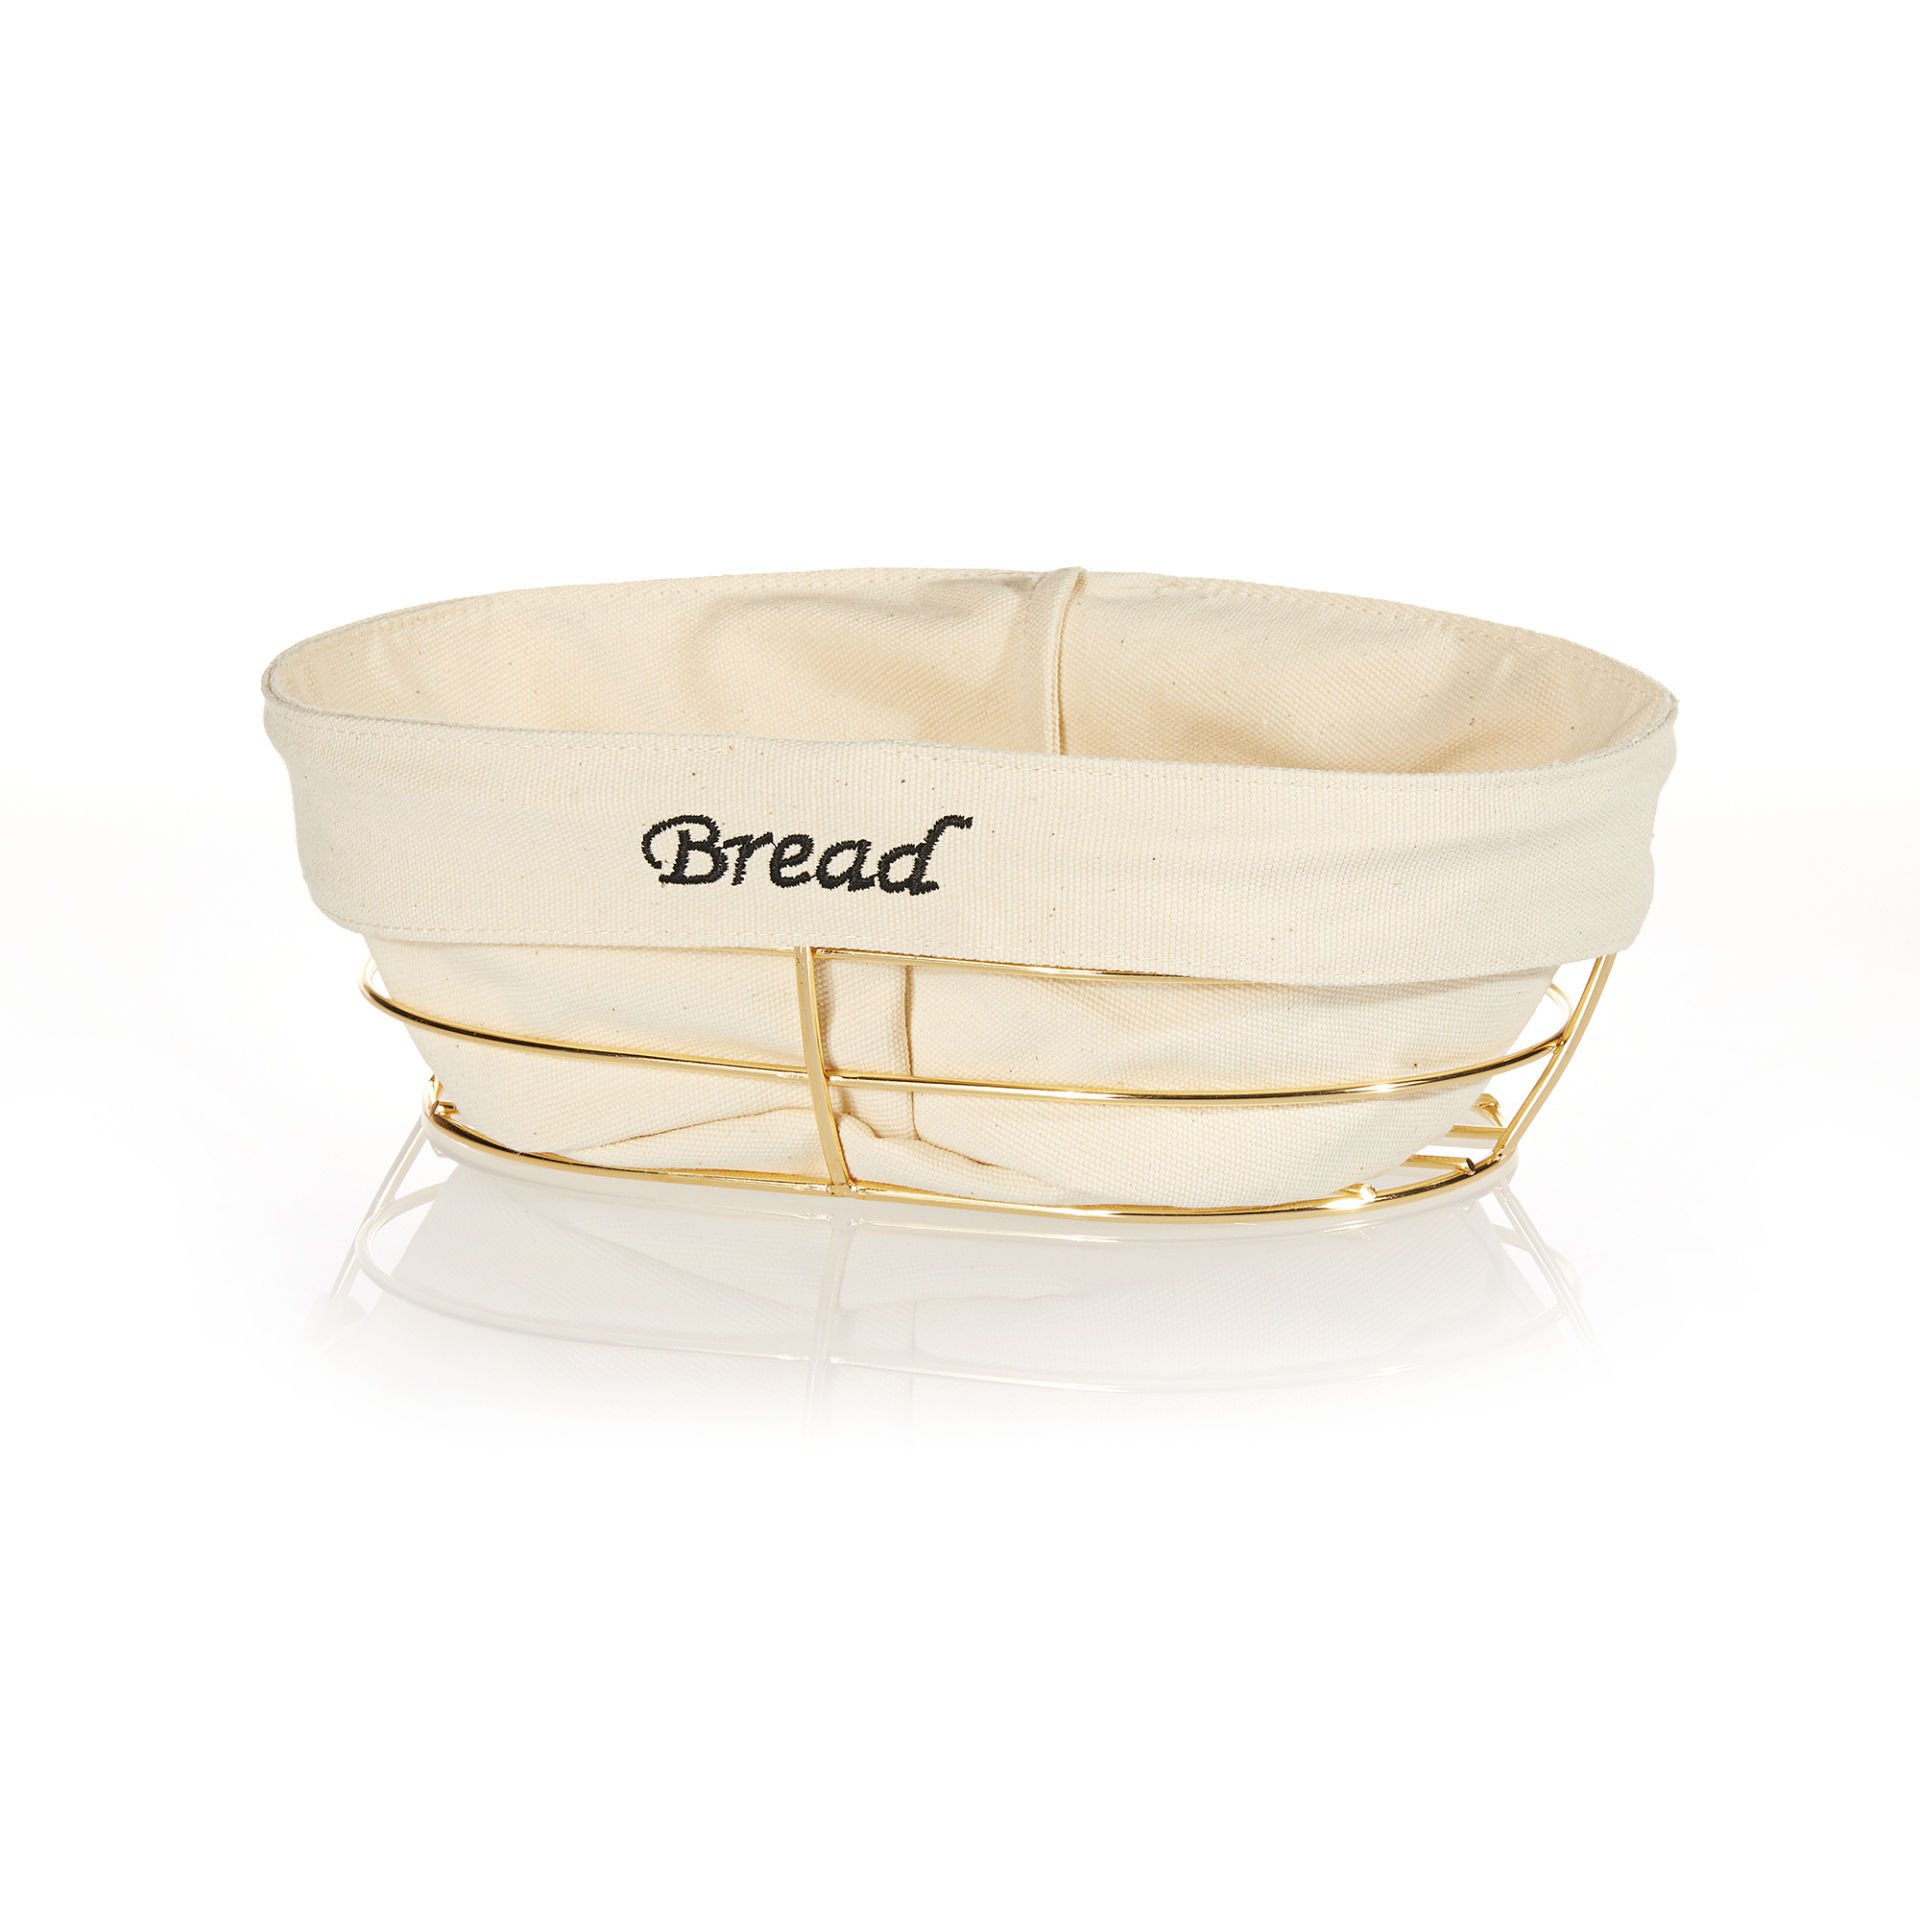 BRD-HW186B-ALTIN Oval Bezli Ekmek Sepeti (Altın) - 26 x 17 x 6,5 cm